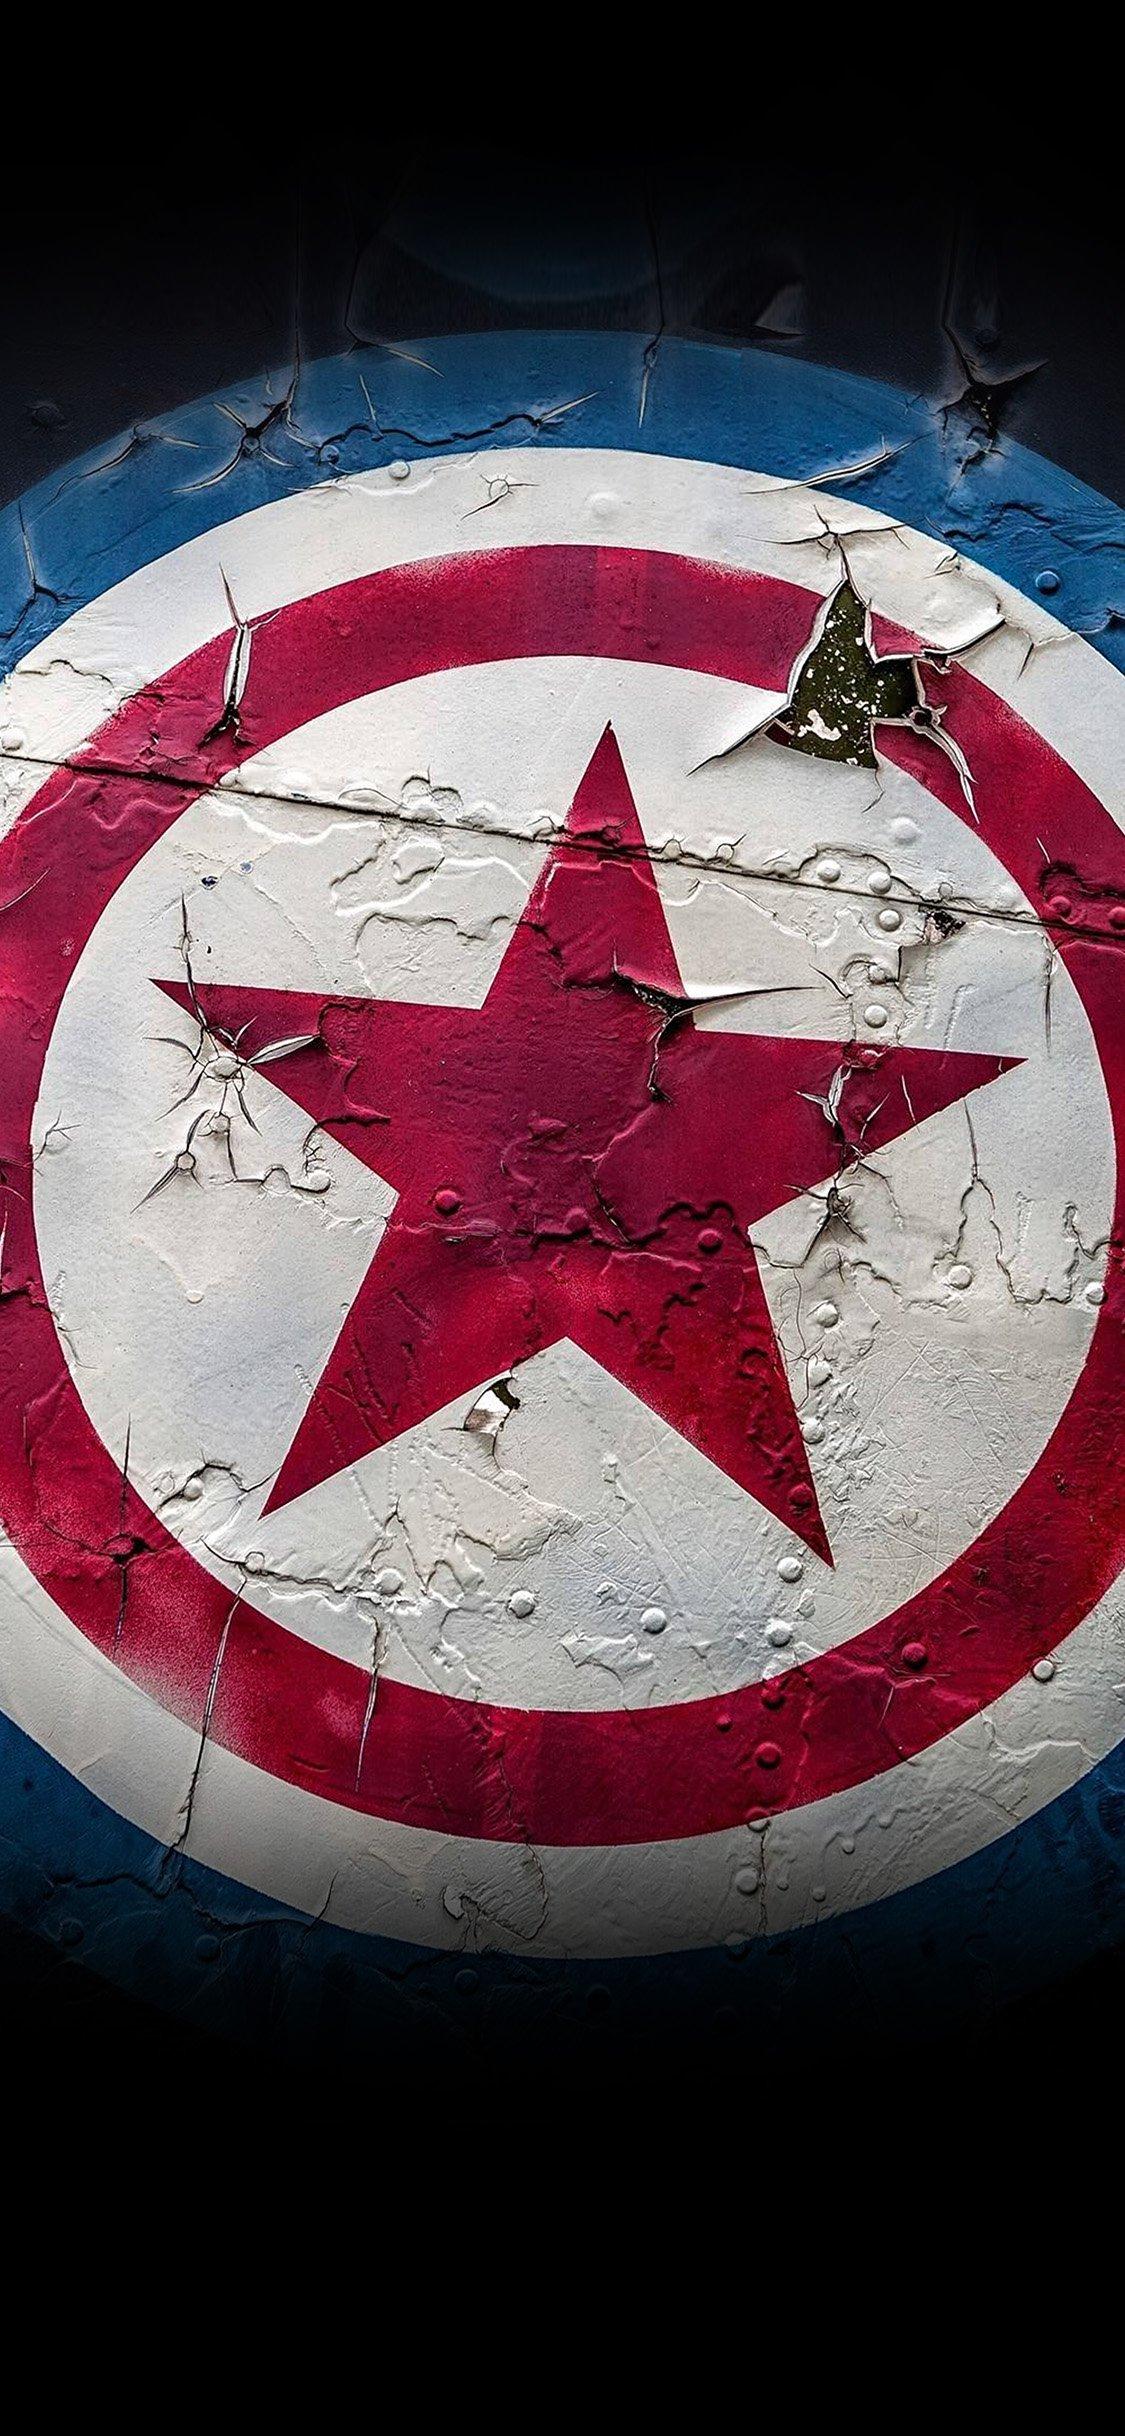 Captain america marvel hero iPhone X Wallpaper Free Download